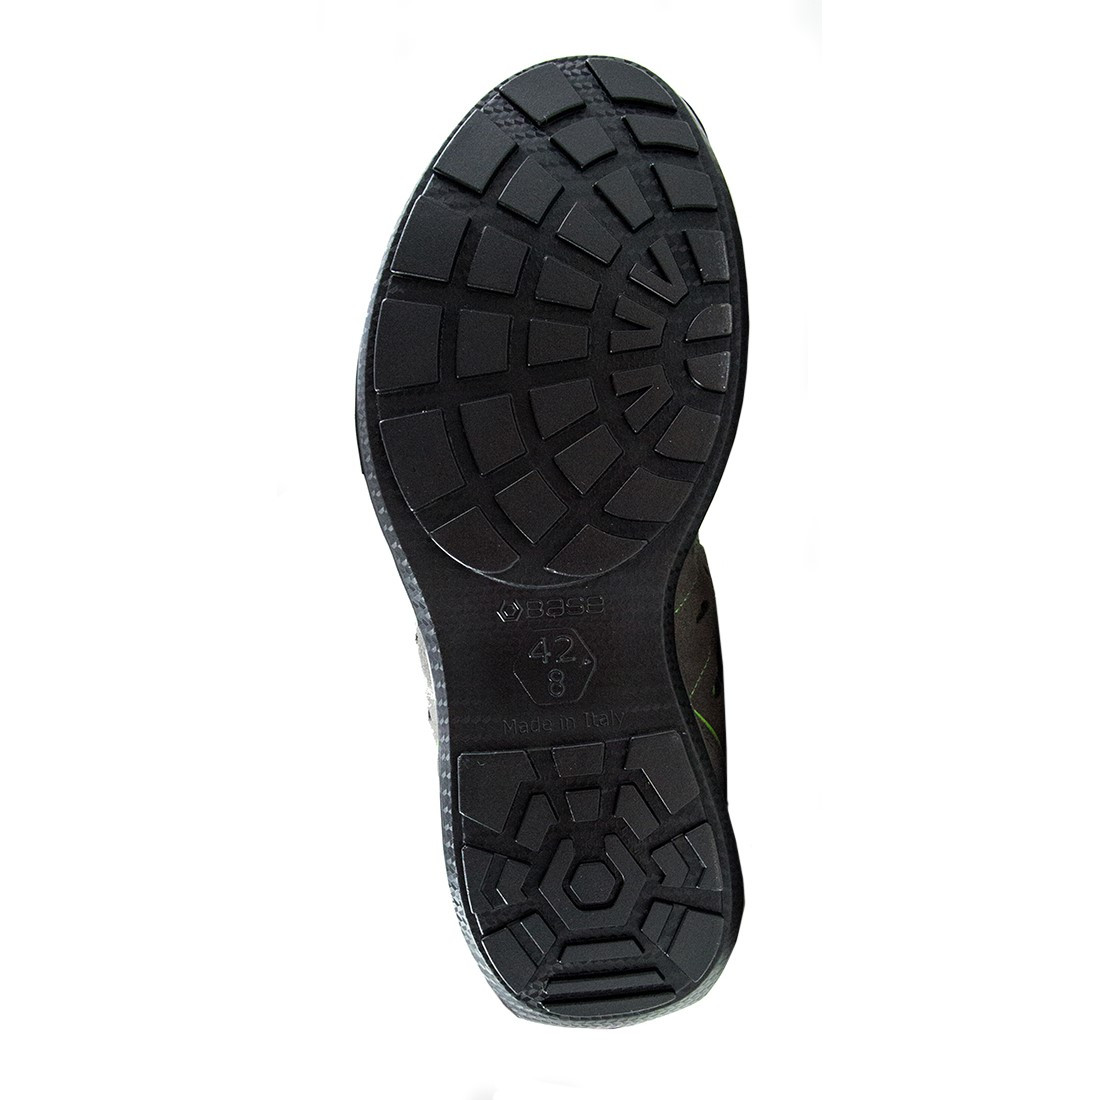 Pantofi Bowling - Tennis S3 SRC - Incaltaminte de protectie | Bocanci, Pantofi, Sandale, Cizme